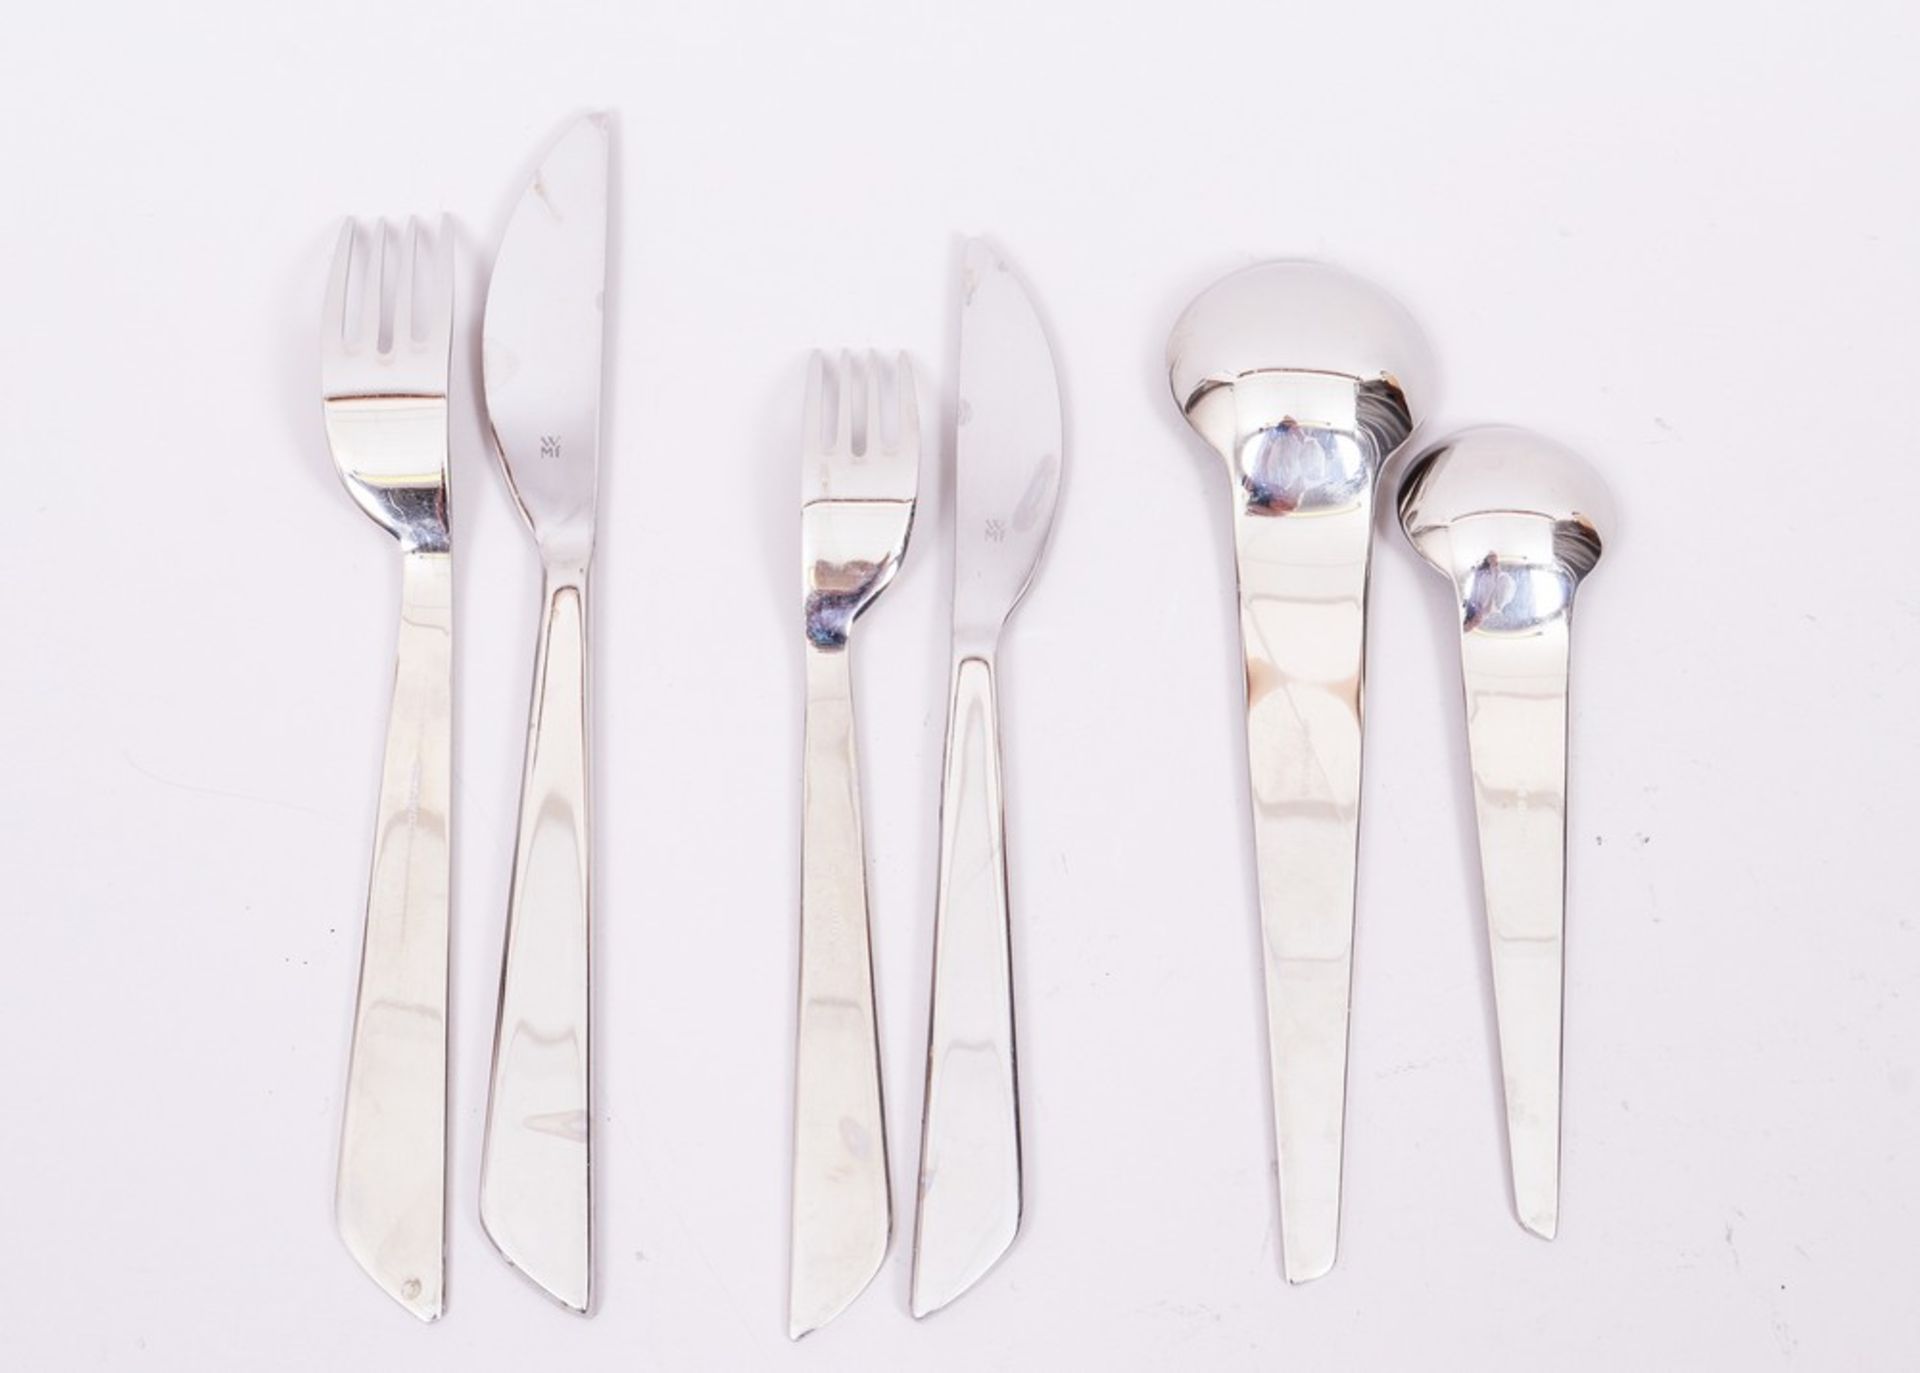 Cutlery for 10 people, design Peter Küster for WMF, Geislingen, 1990s - Image 5 of 6